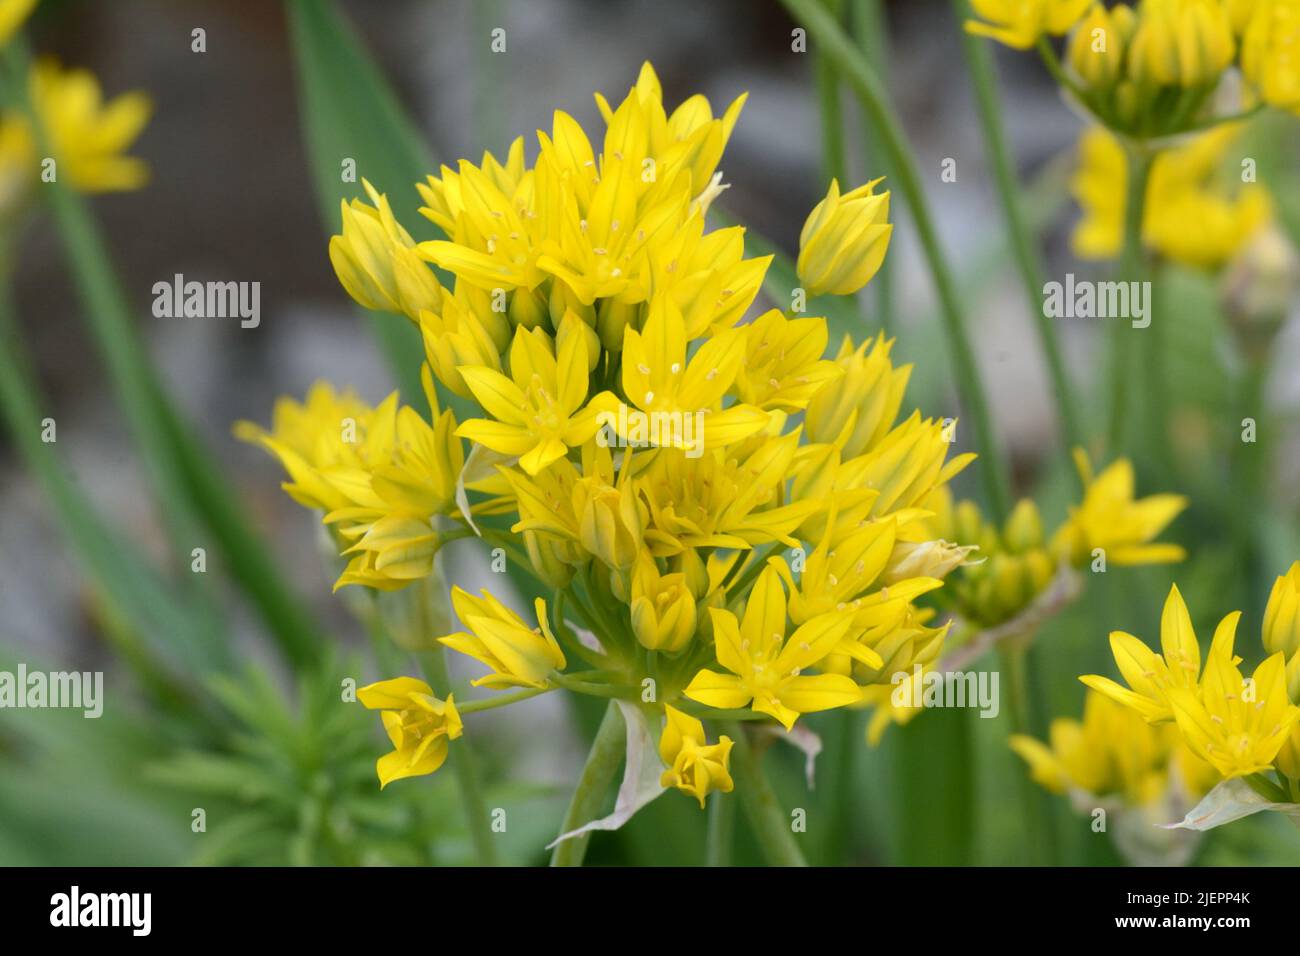 Allium Moly Golden Garlic Yellow garlic flowers Stock Photo